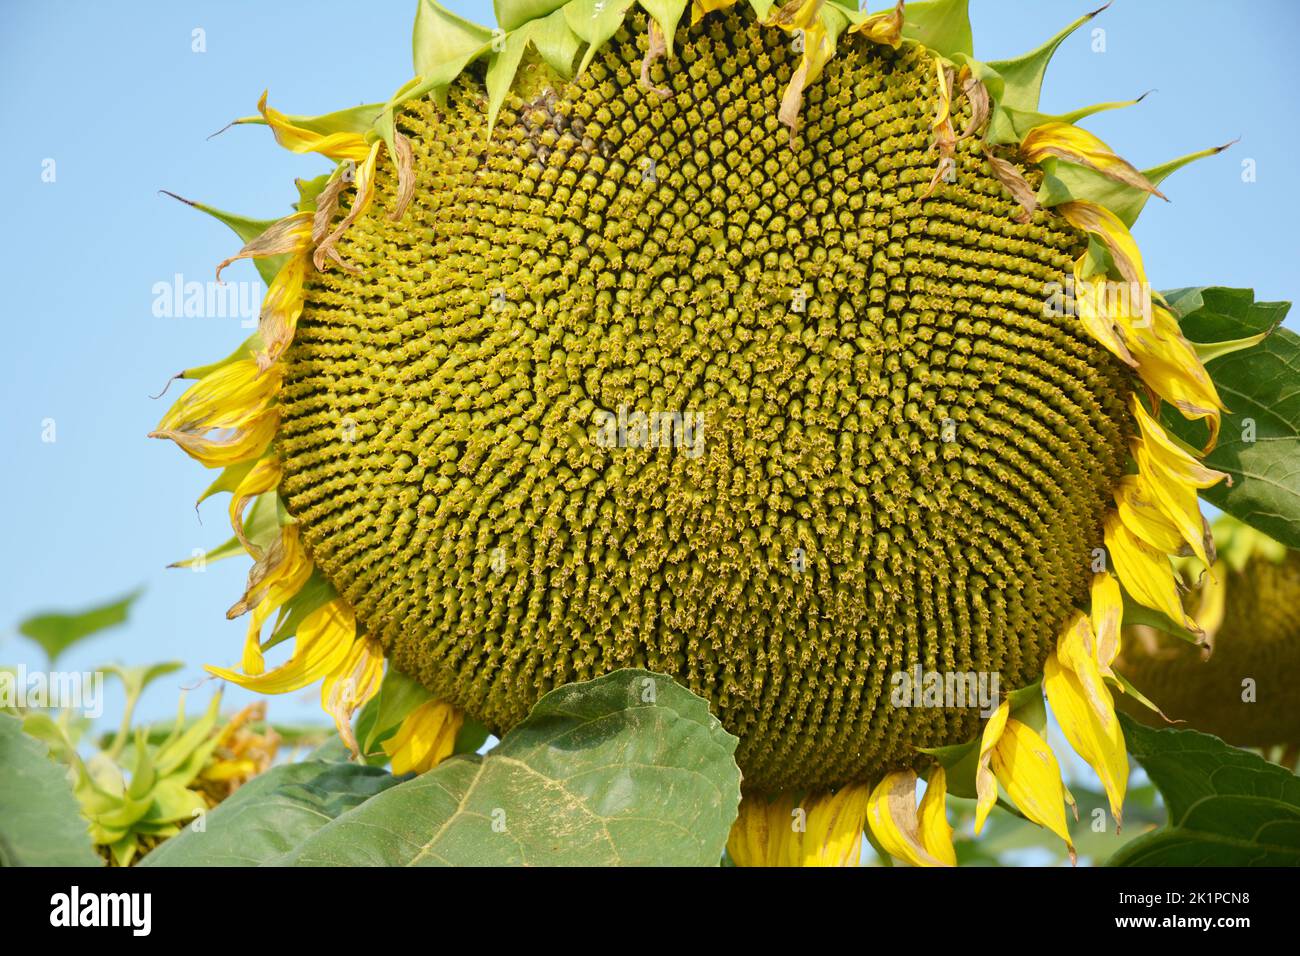 Ripe sunflower seeds on green sunflower plant ready for harvesting. Stock Photo